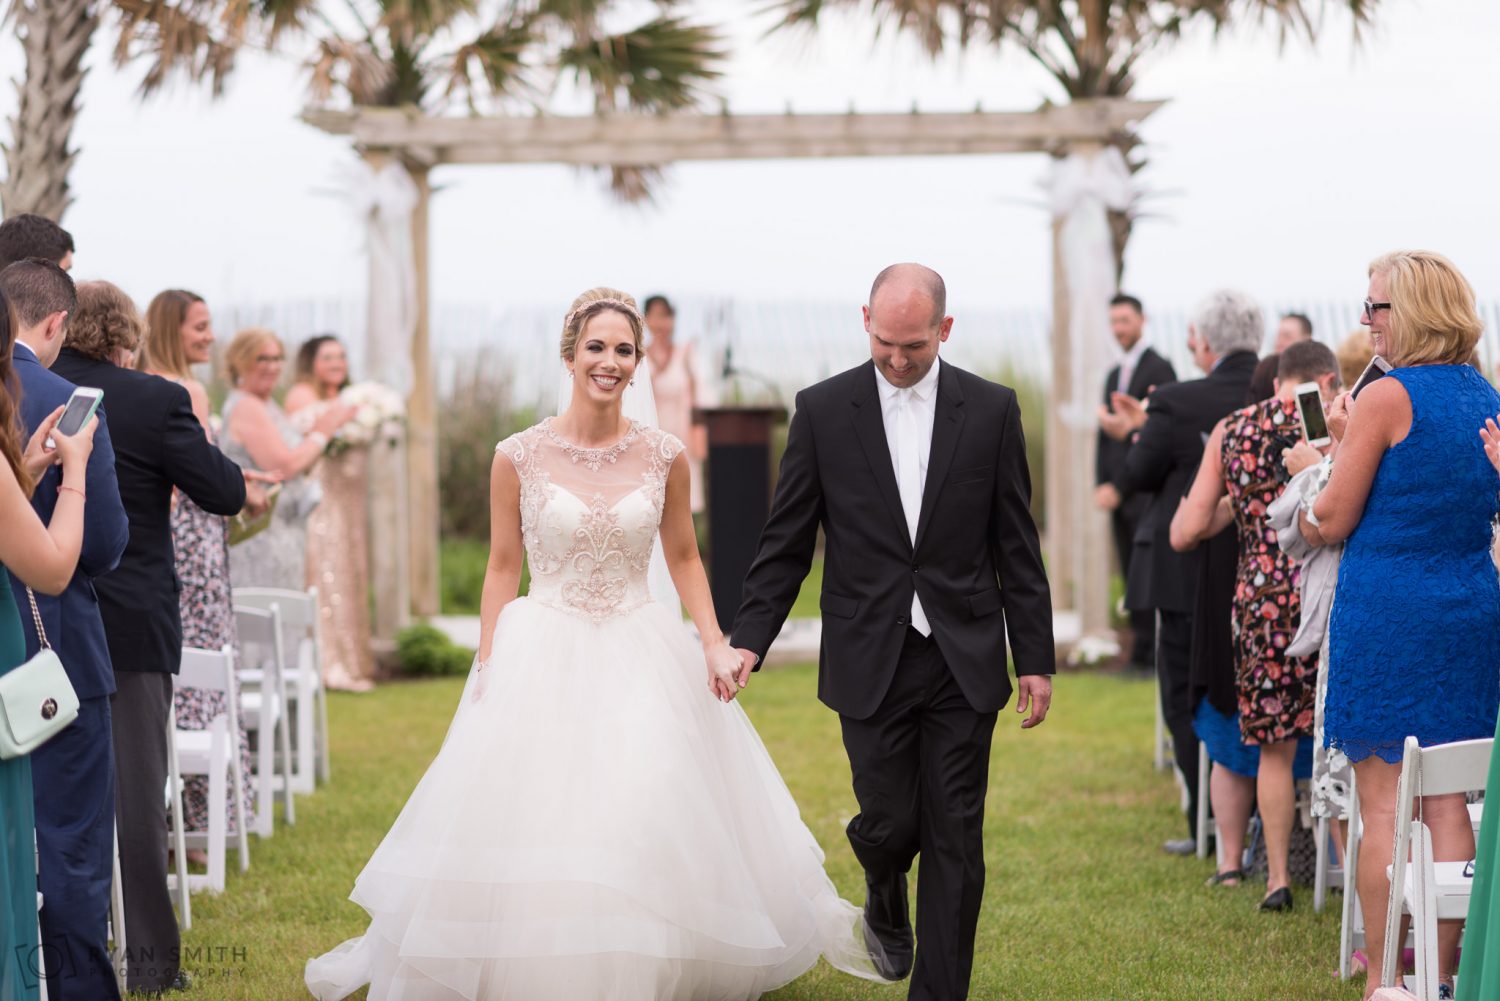 Happy bride walking down the isle with groom Hilton Myrtle Beach Resort